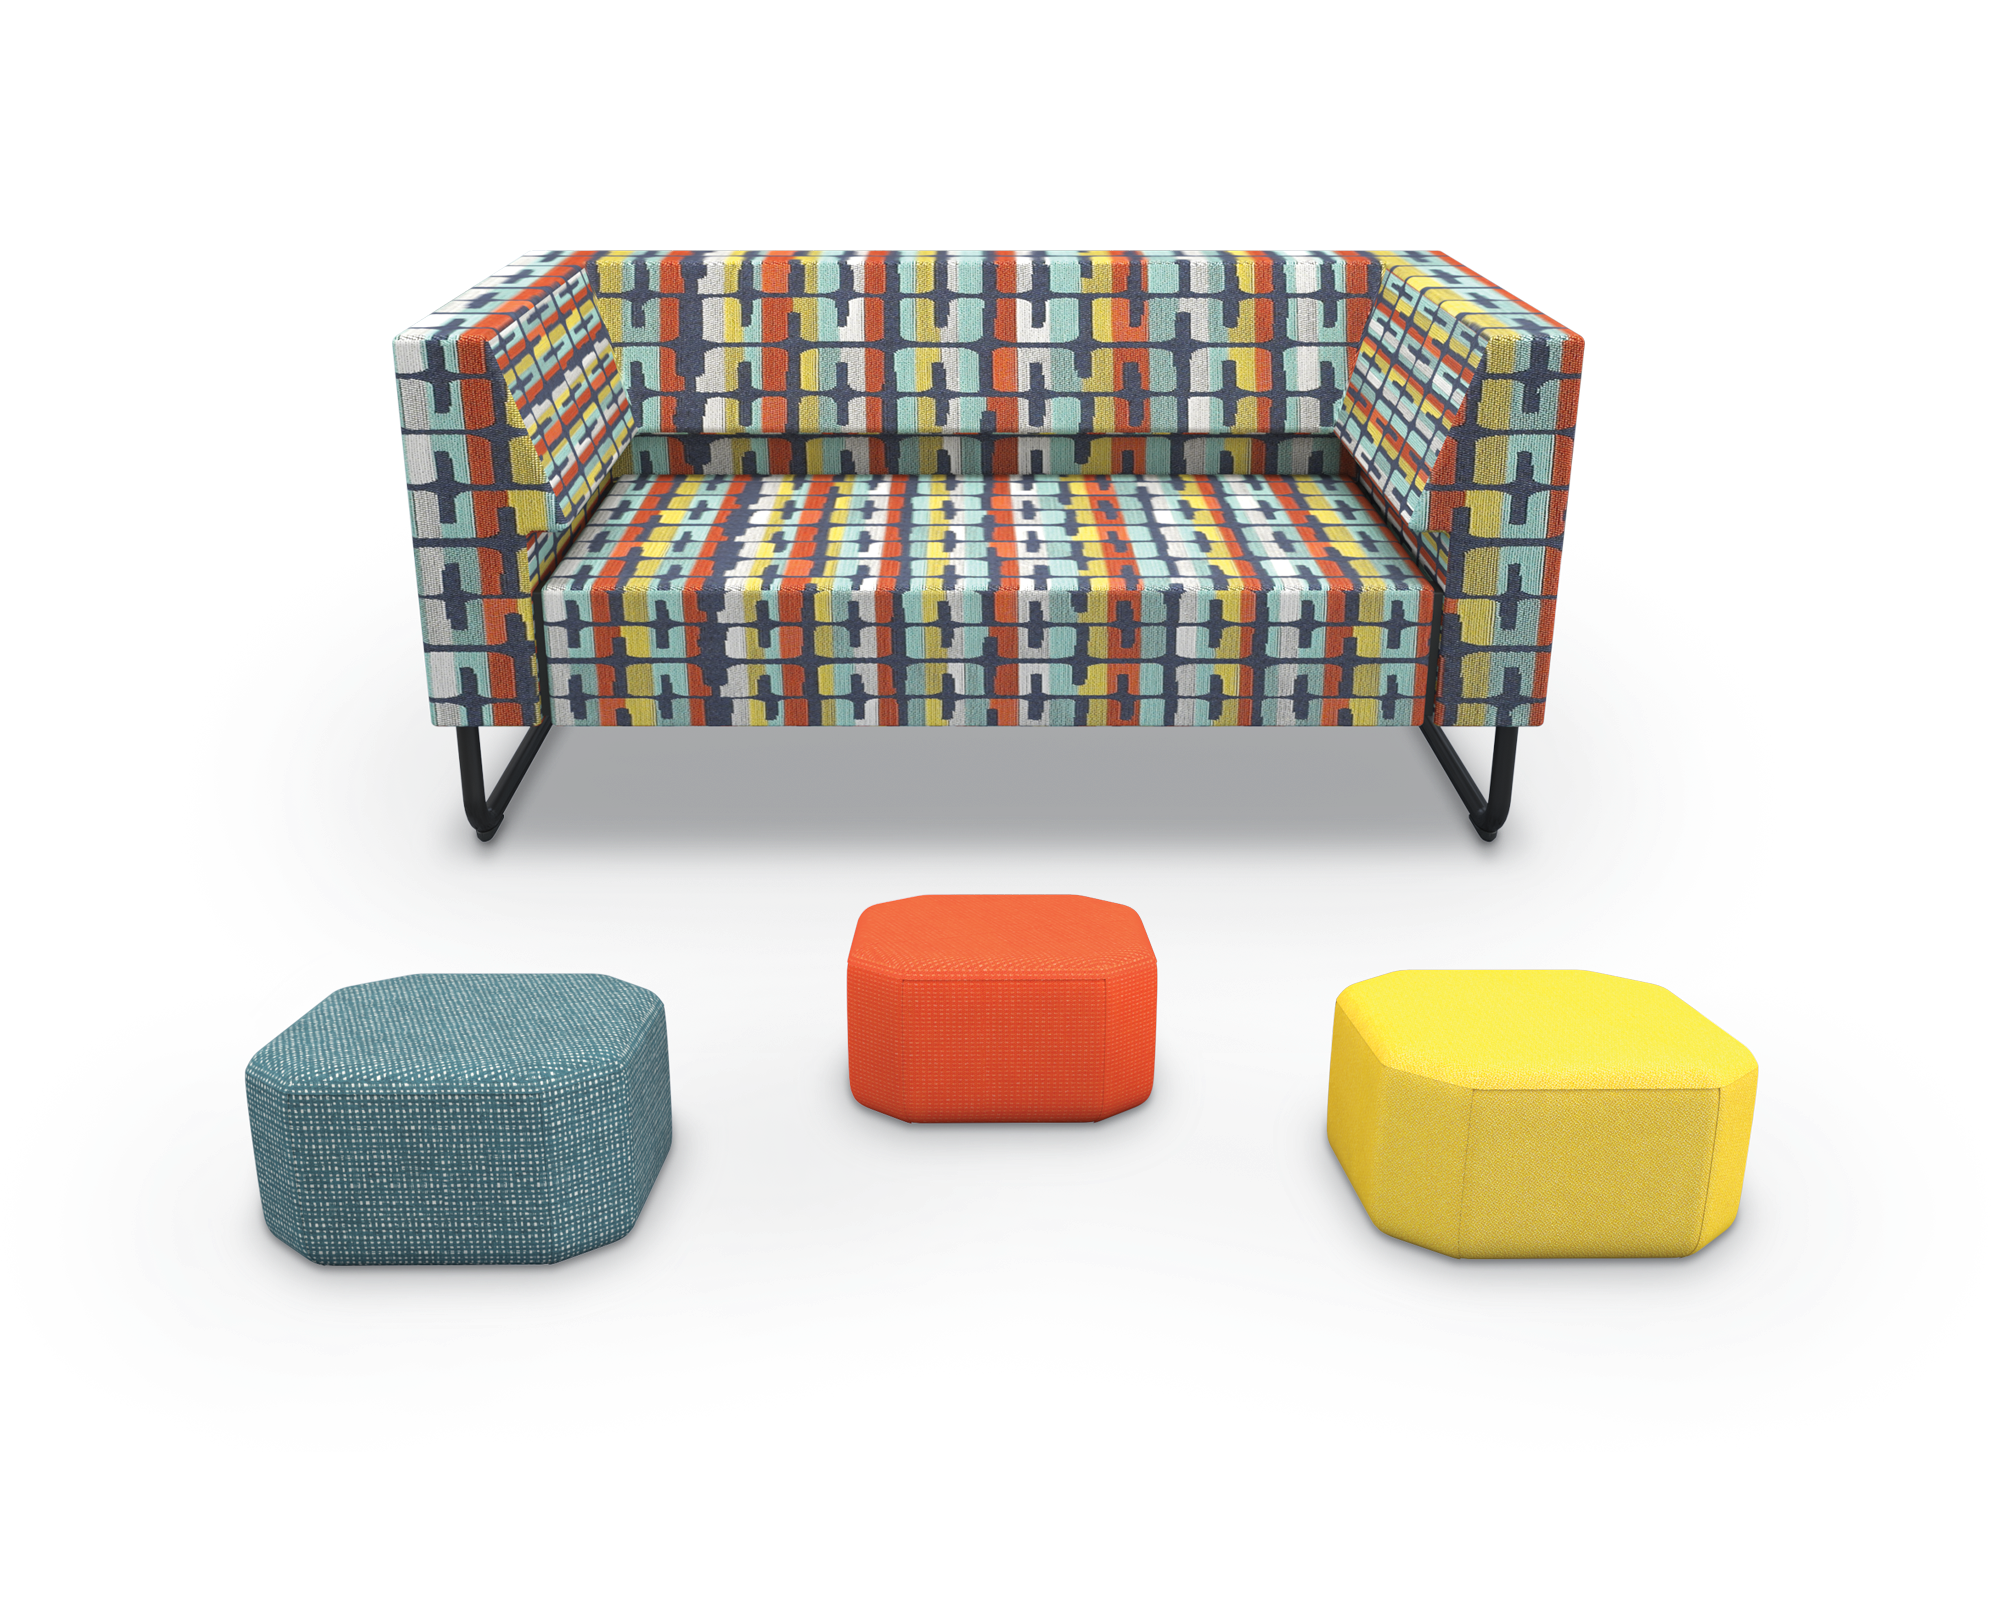 MooreCo furniture for esports lounge